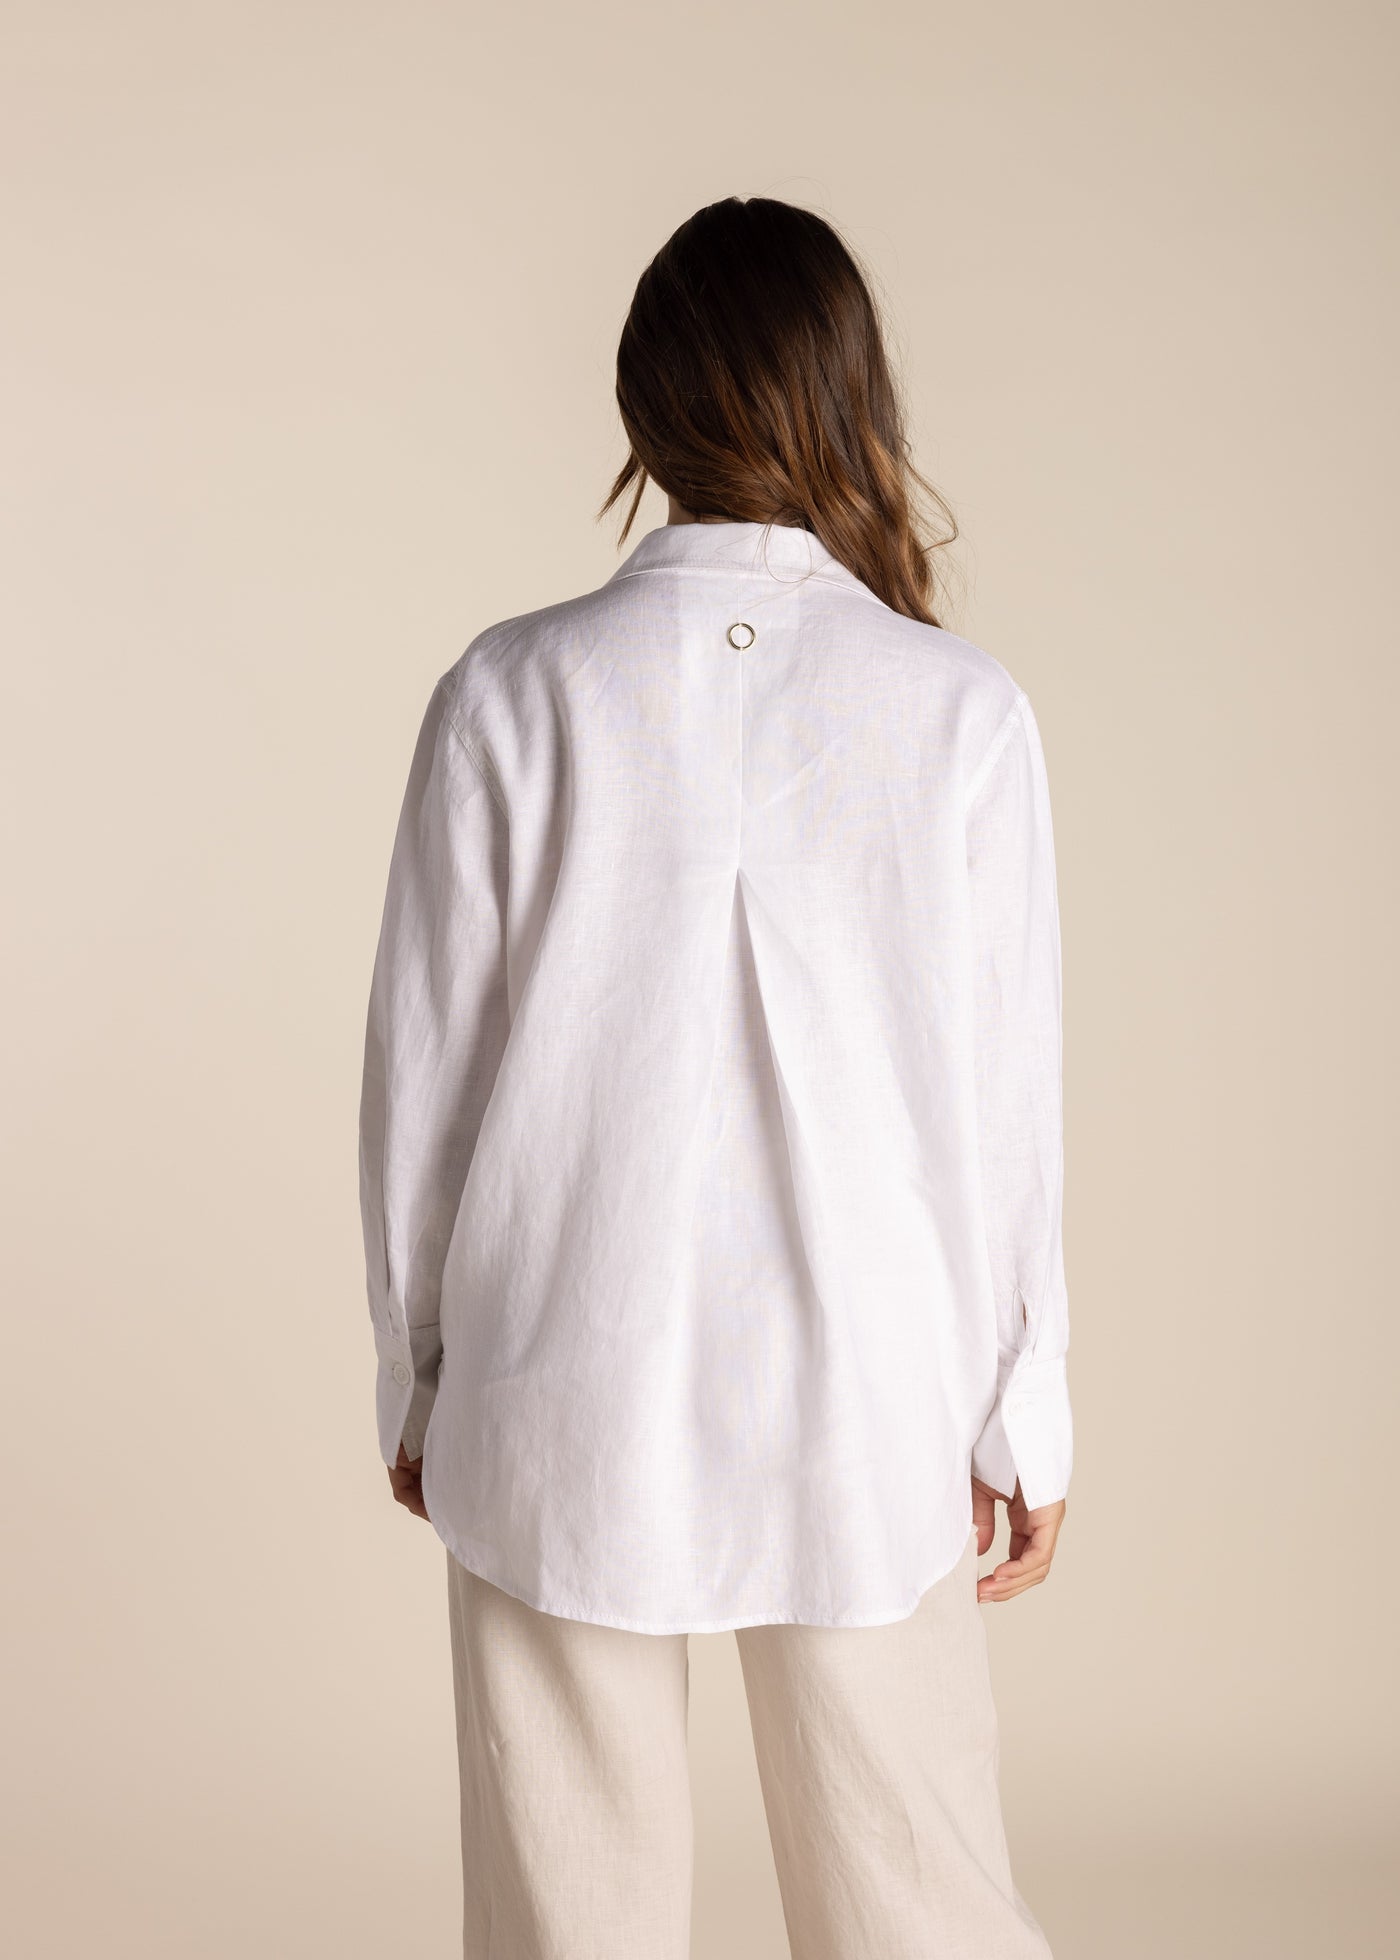 Two T's</p>Linen Shirt</p>(White)